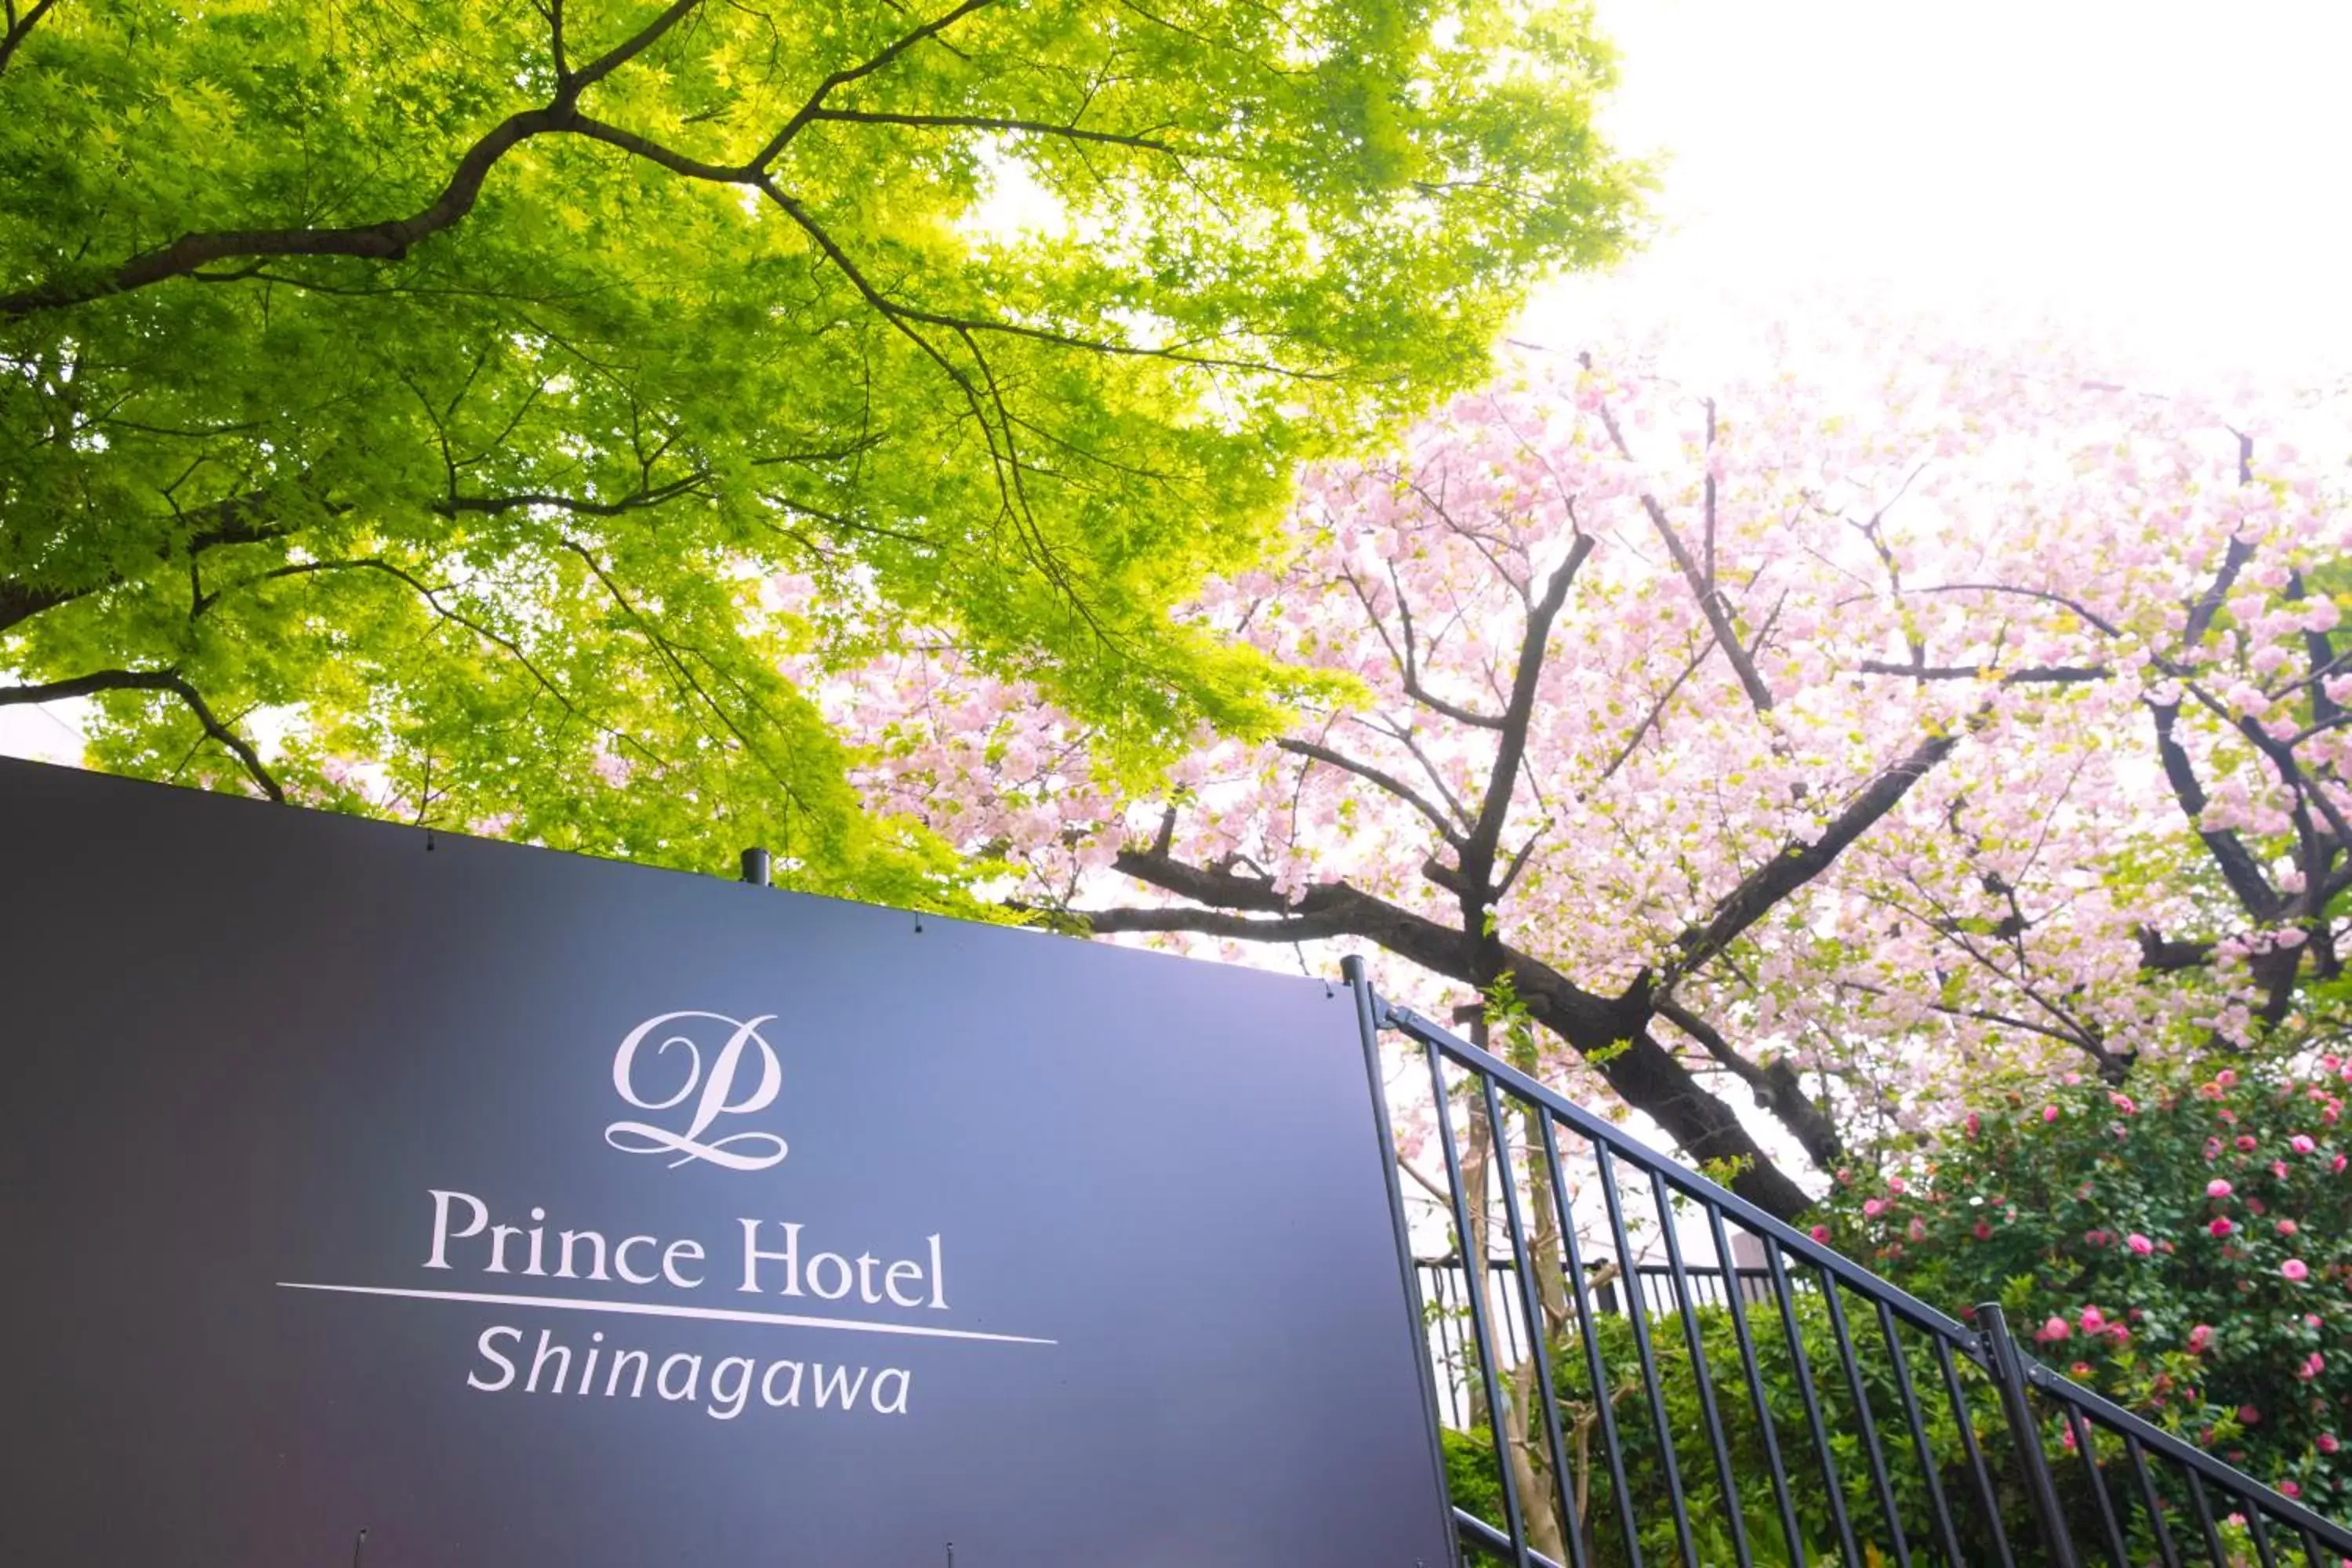 Off site in Shinagawa Prince Hotel